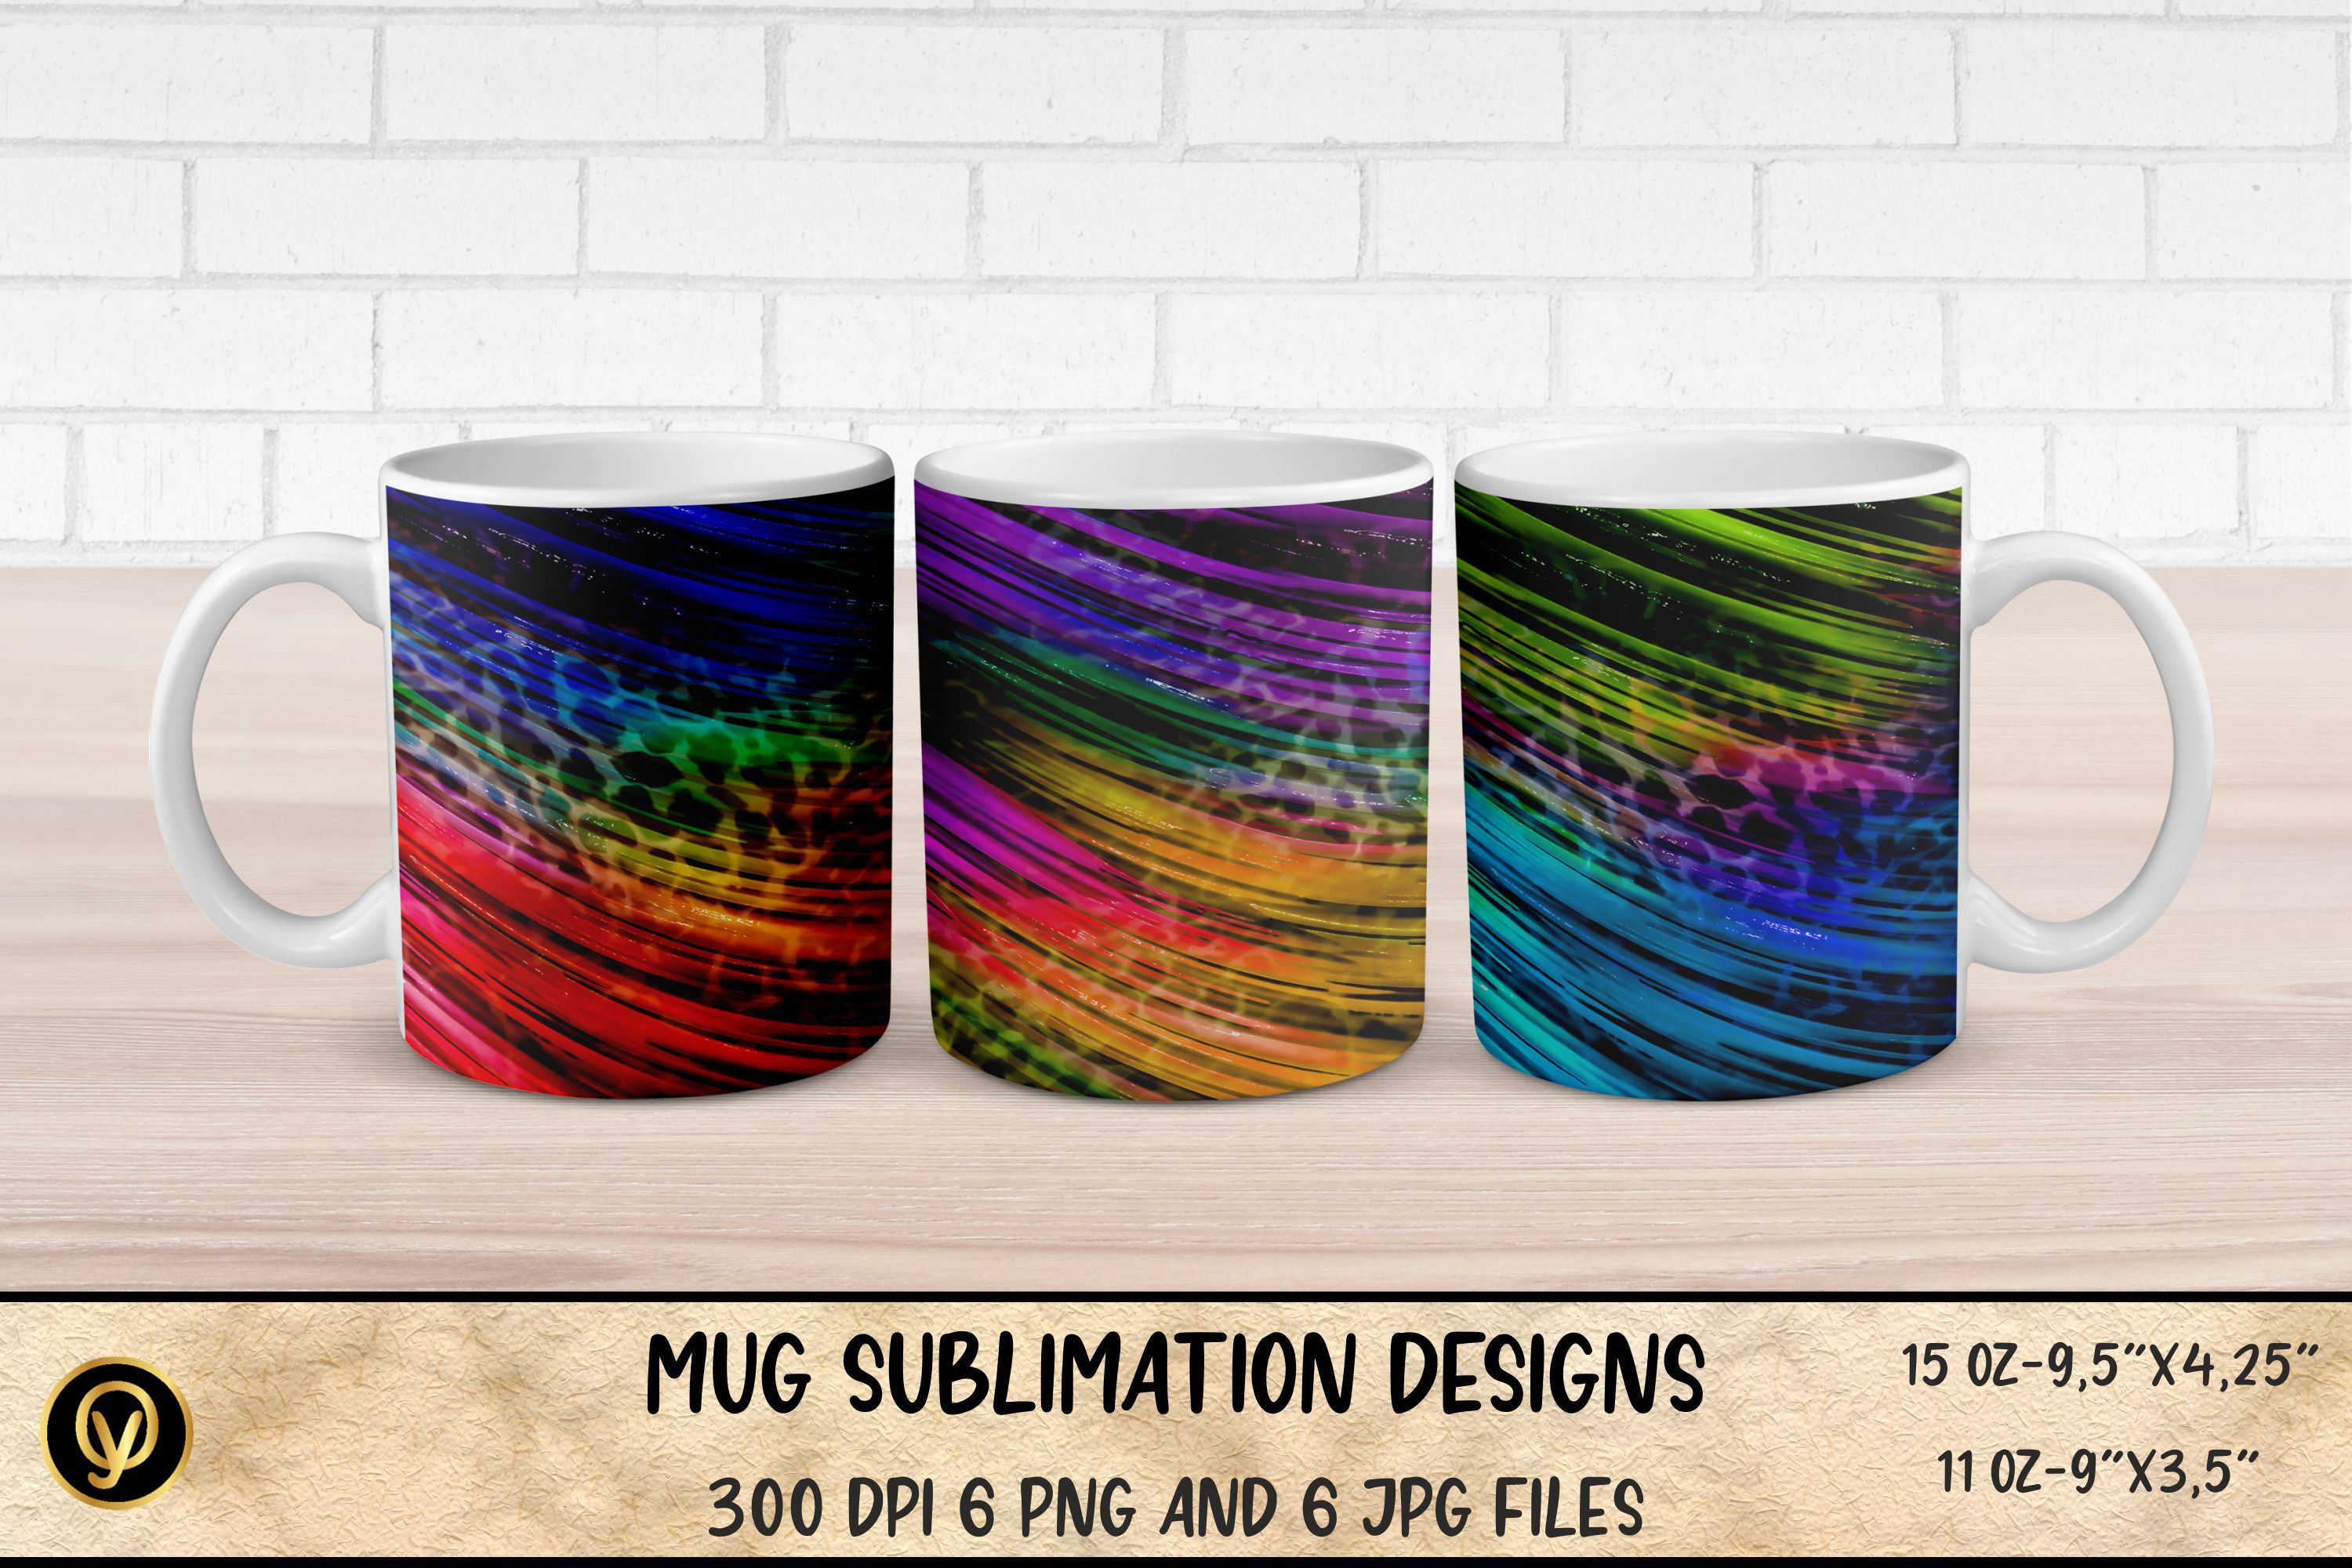 https://media1.thehungryjpeg.com/thumbs2/ori_4107403_a74t0xbx6515tg38j5wm2n39stbh39lq77zuzm59_mug-sublimation-designs-abstract-sublimation-mug.jpg